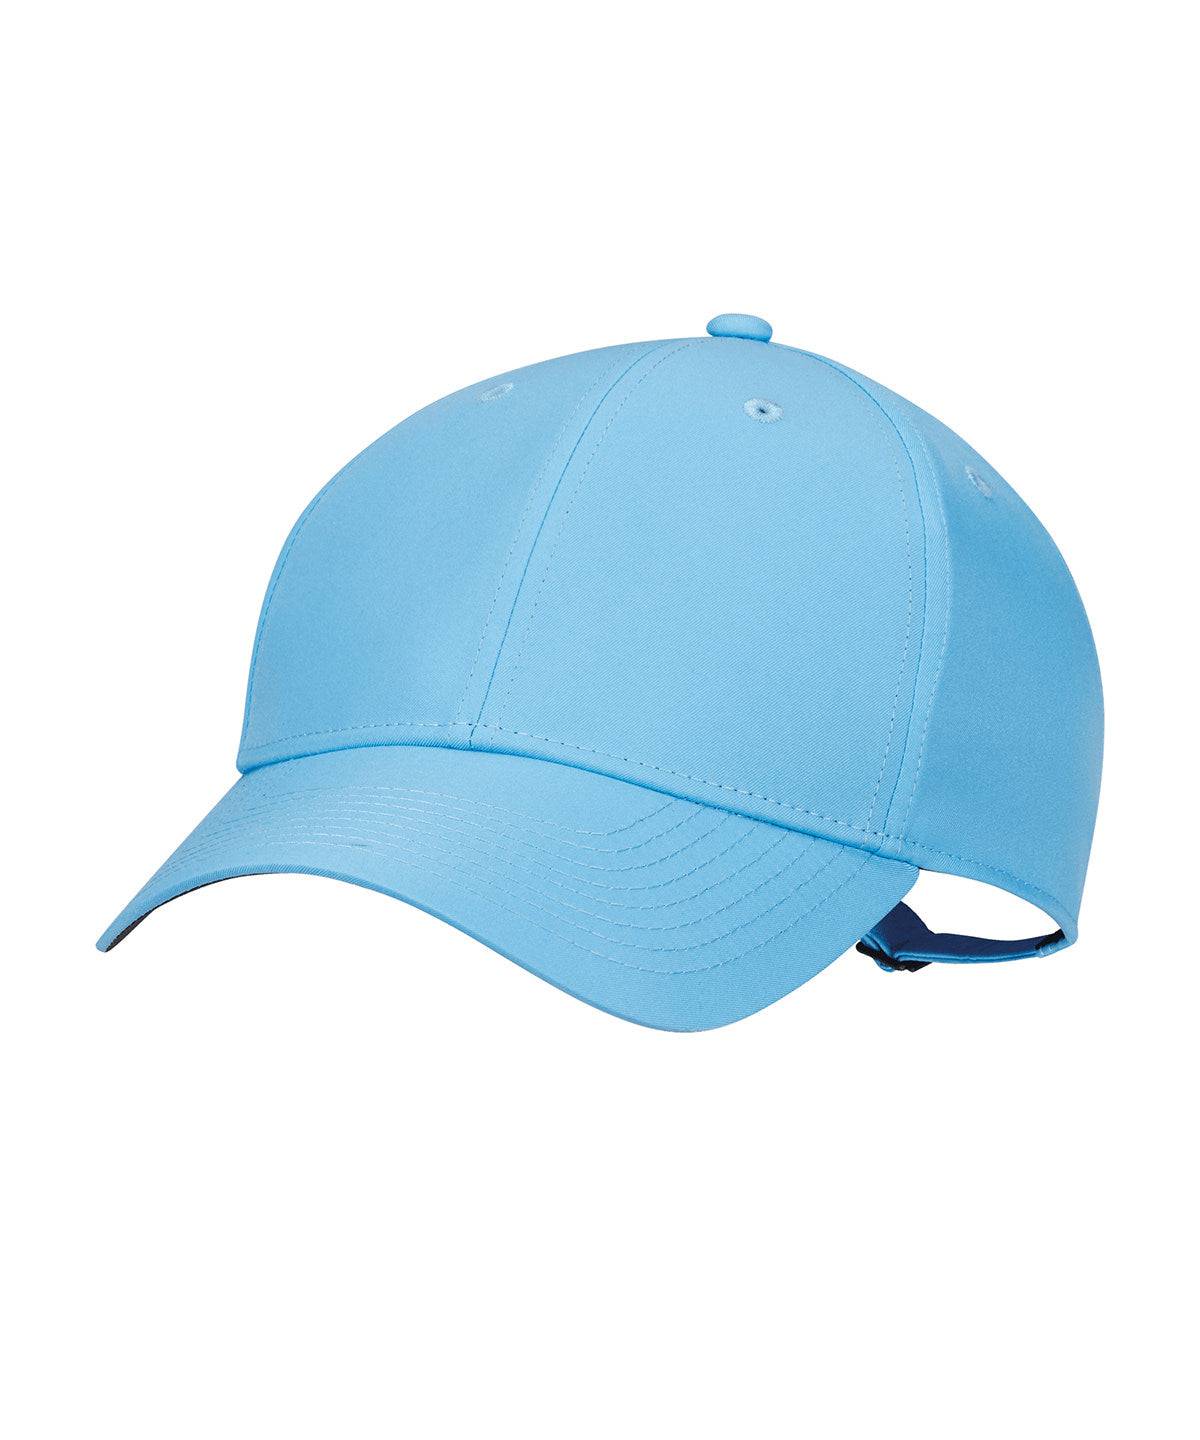 University Blue/White - Nike Dri-FIT Club cap CB custom